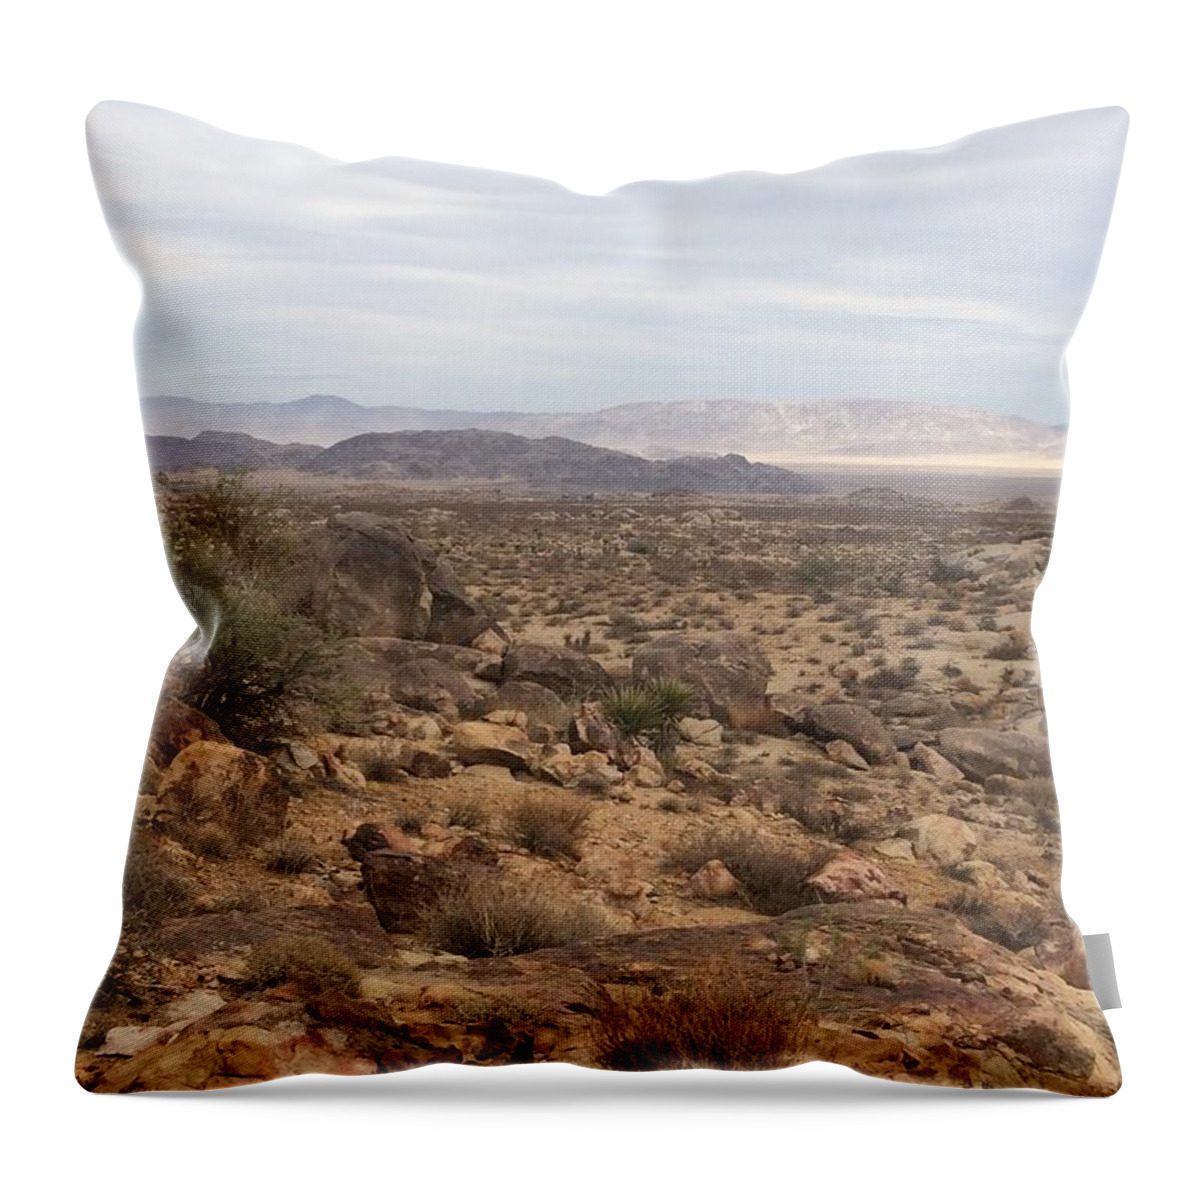 Desert Throw Pillow featuring the photograph Alone by Barbara Prestridge